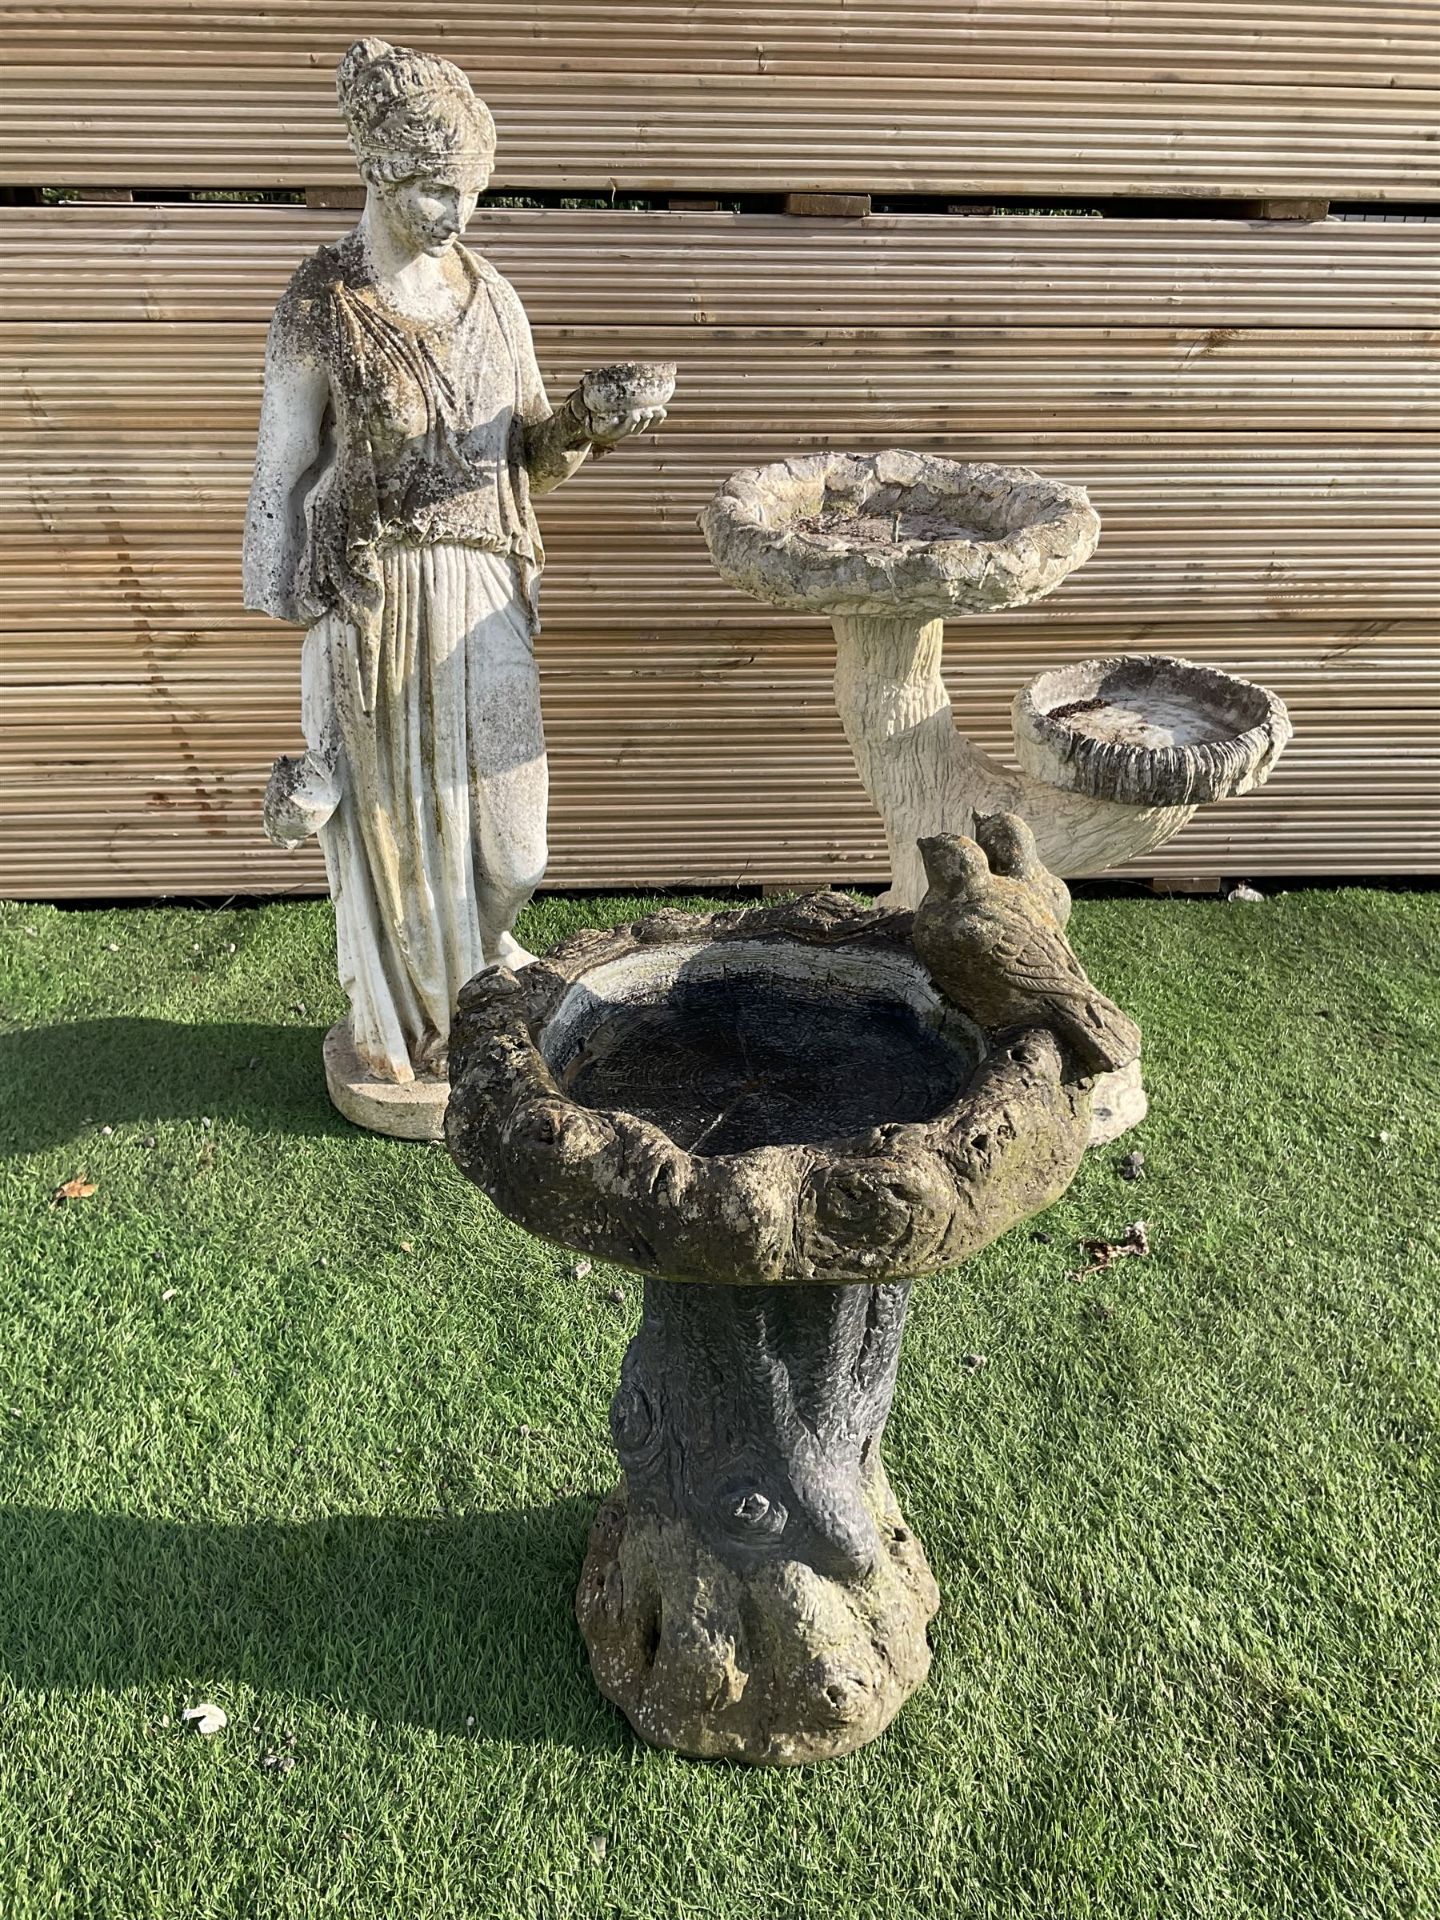 Cast stone garden figure and two bird baths